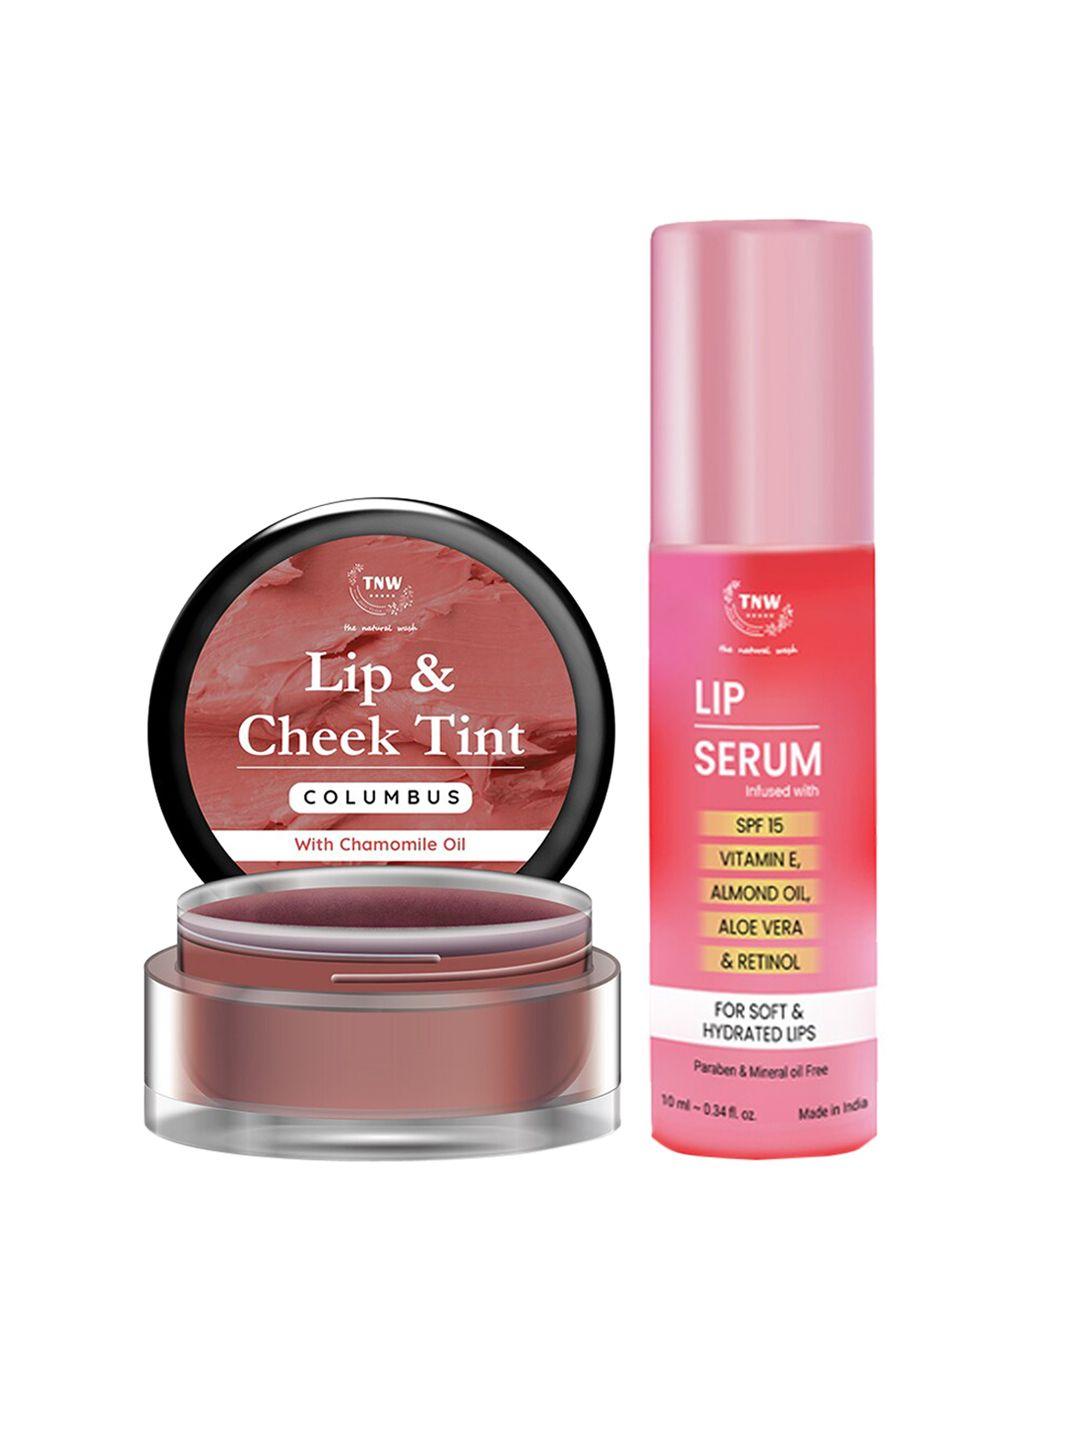 tnw the natural wash set of lip & cheek tint-columbus & lip serum